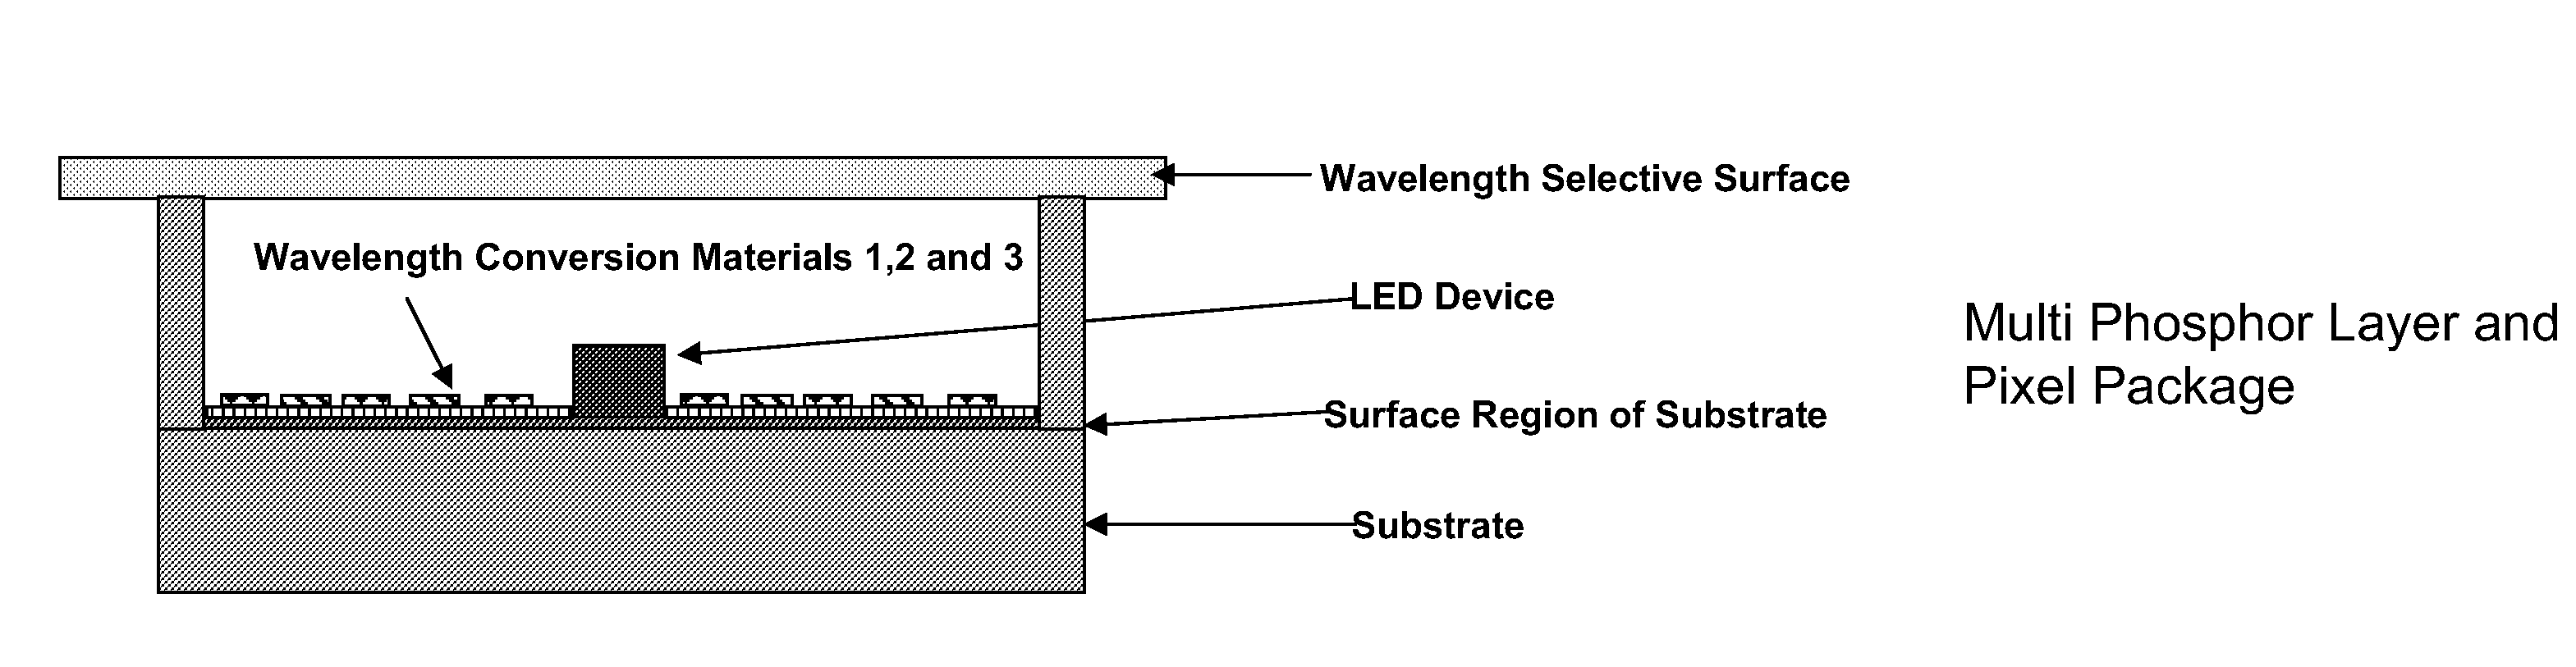 Reflection Mode Wavelength Conversion Material for Optical Devices Using Non-Polar or Semipolar Gallium Containing Materials